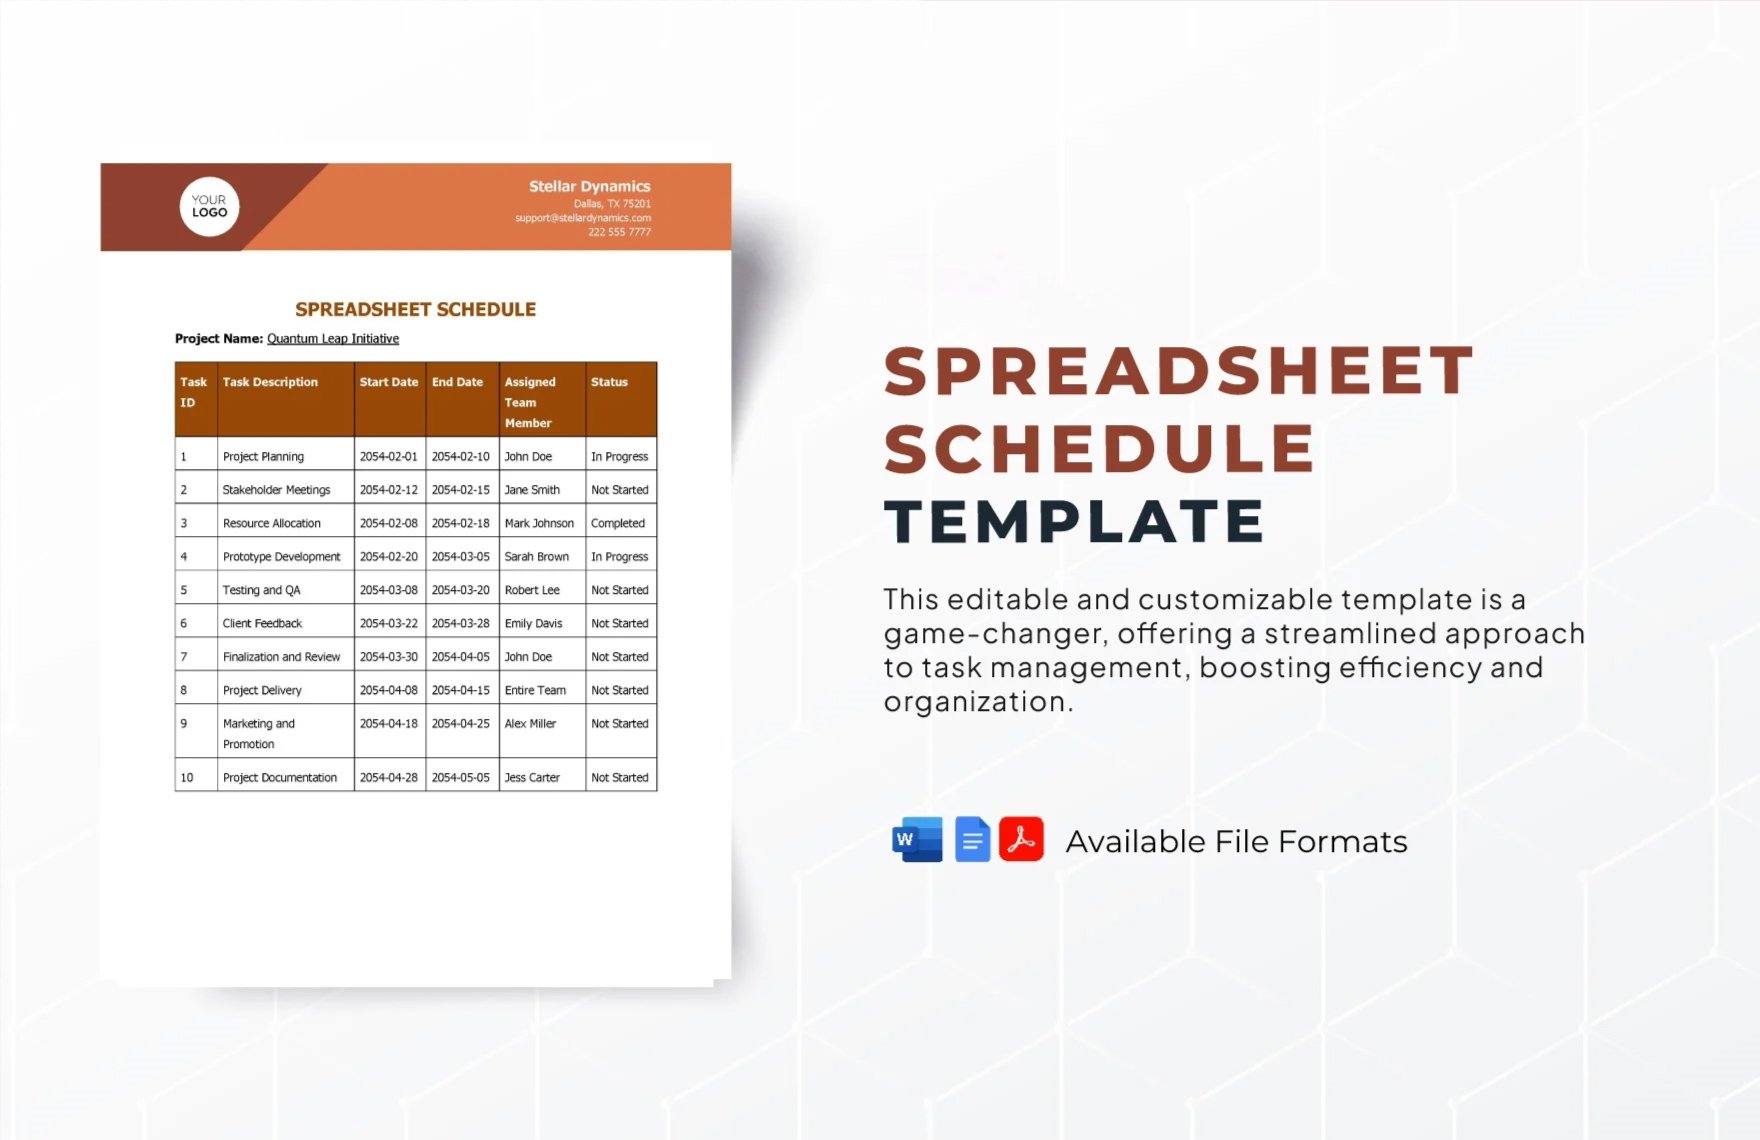 Spreadsheet Schedule Template in Word, Google Docs, PDF